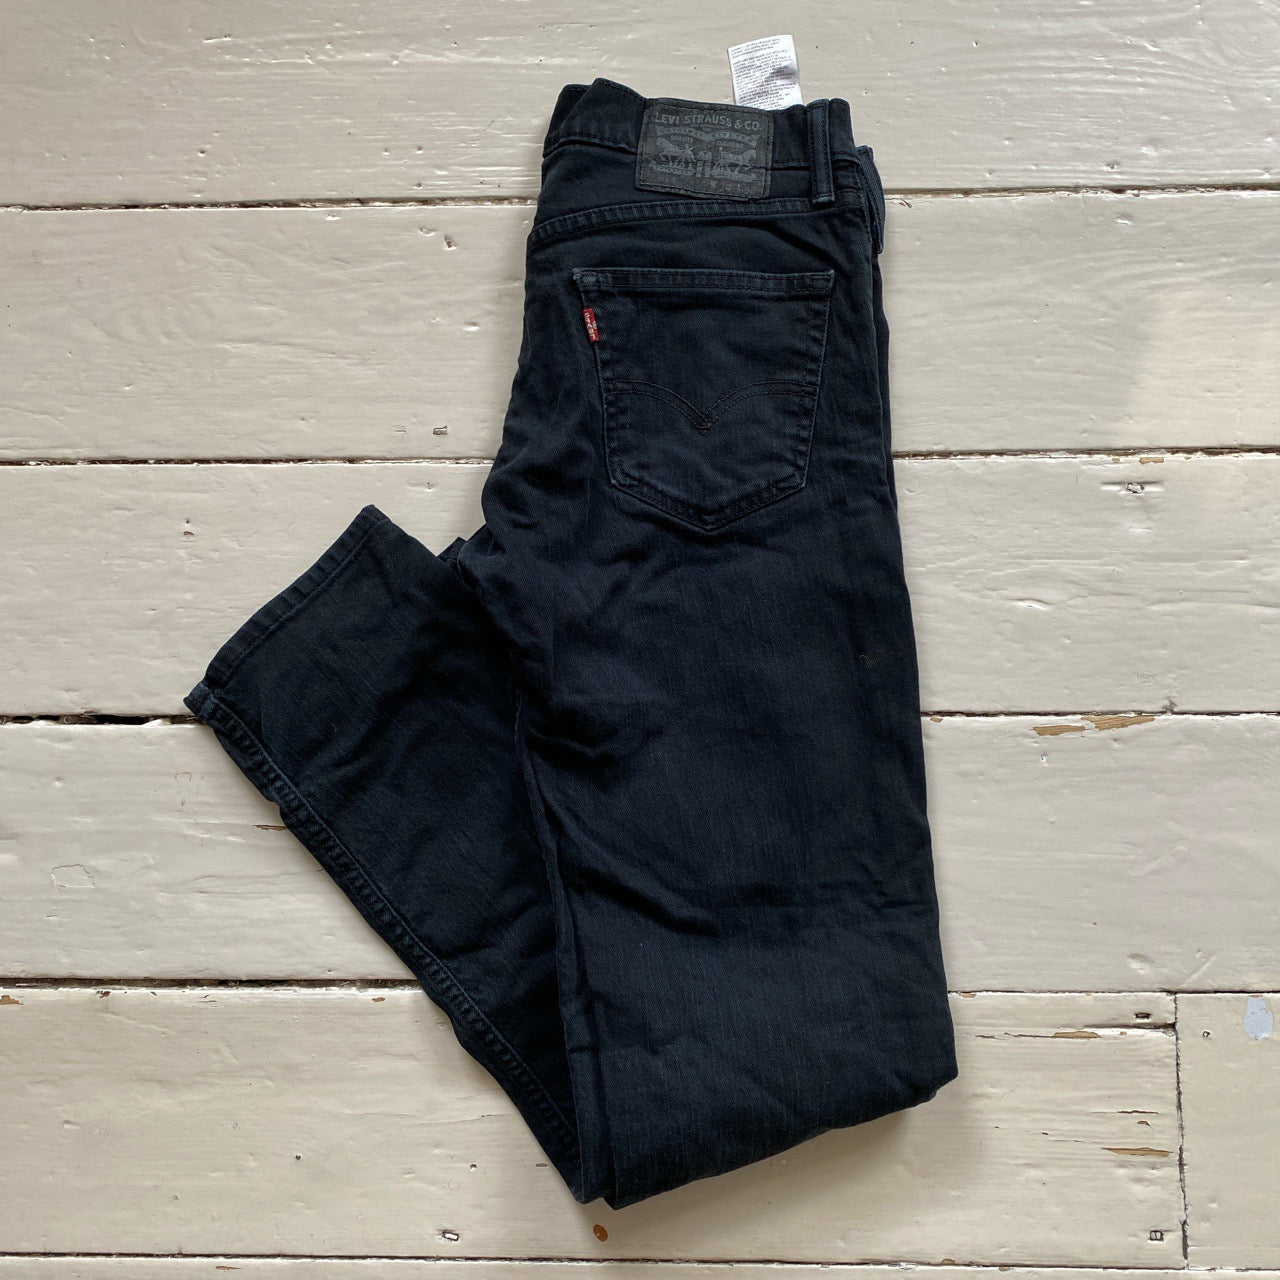 Levis 511 Slim Black Jeans (30/31)